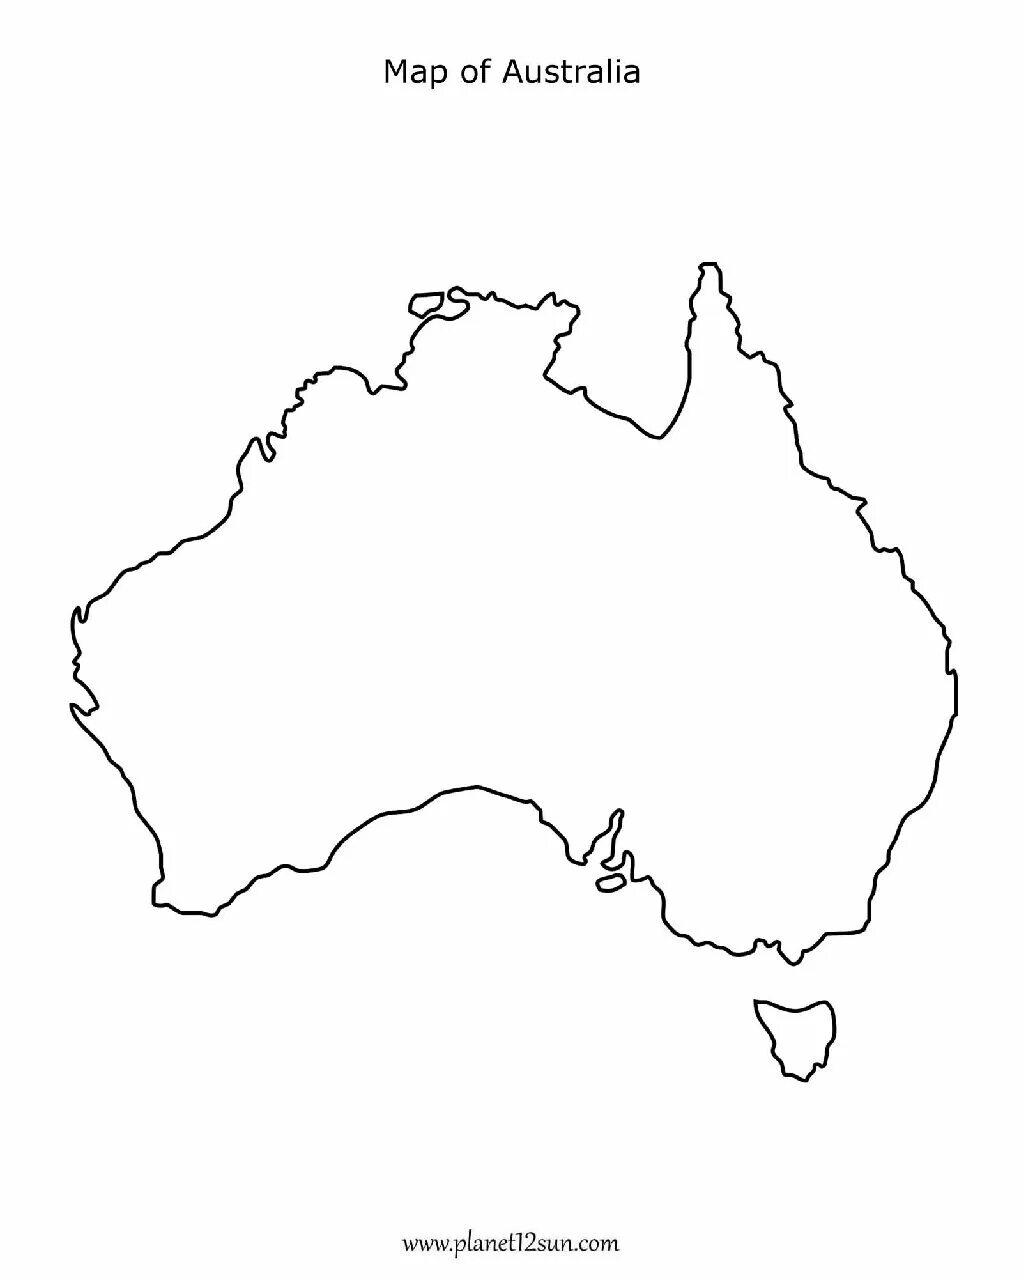 Контур Австралии на карте. Очертания Австралии. Контур материка Австралия. Очертания Австралии на карте.